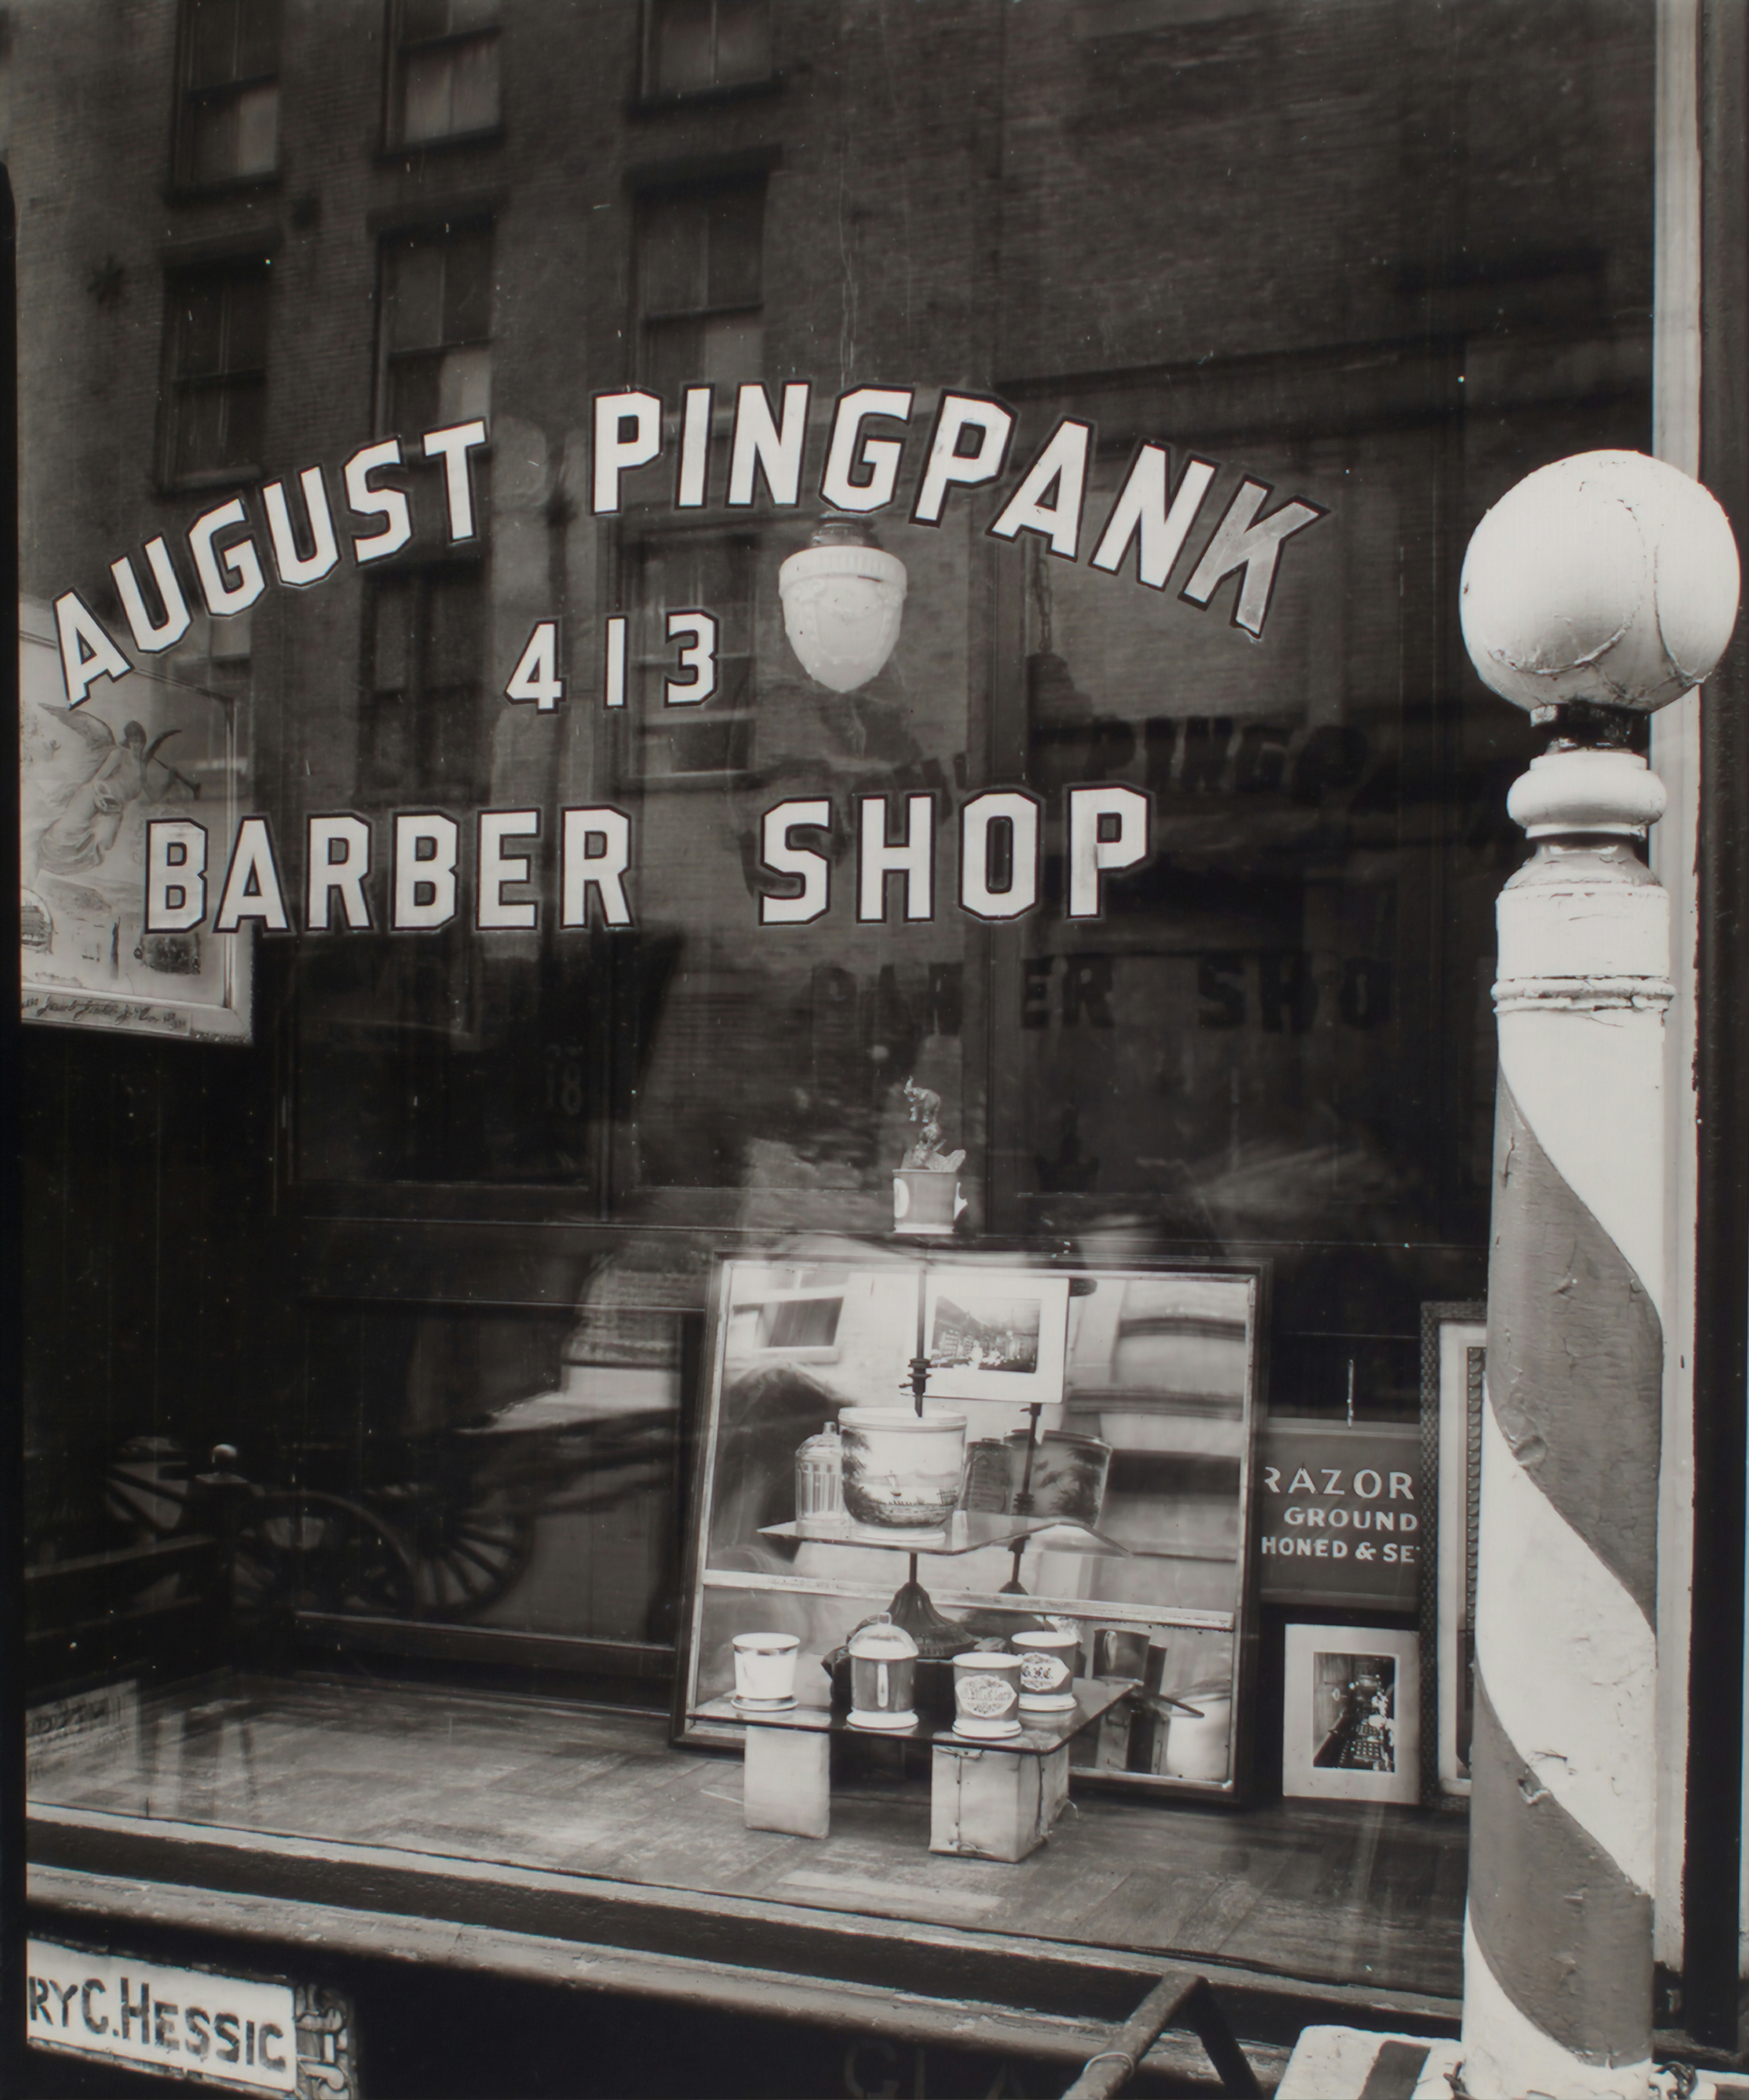 grayscale photo of barber shop window